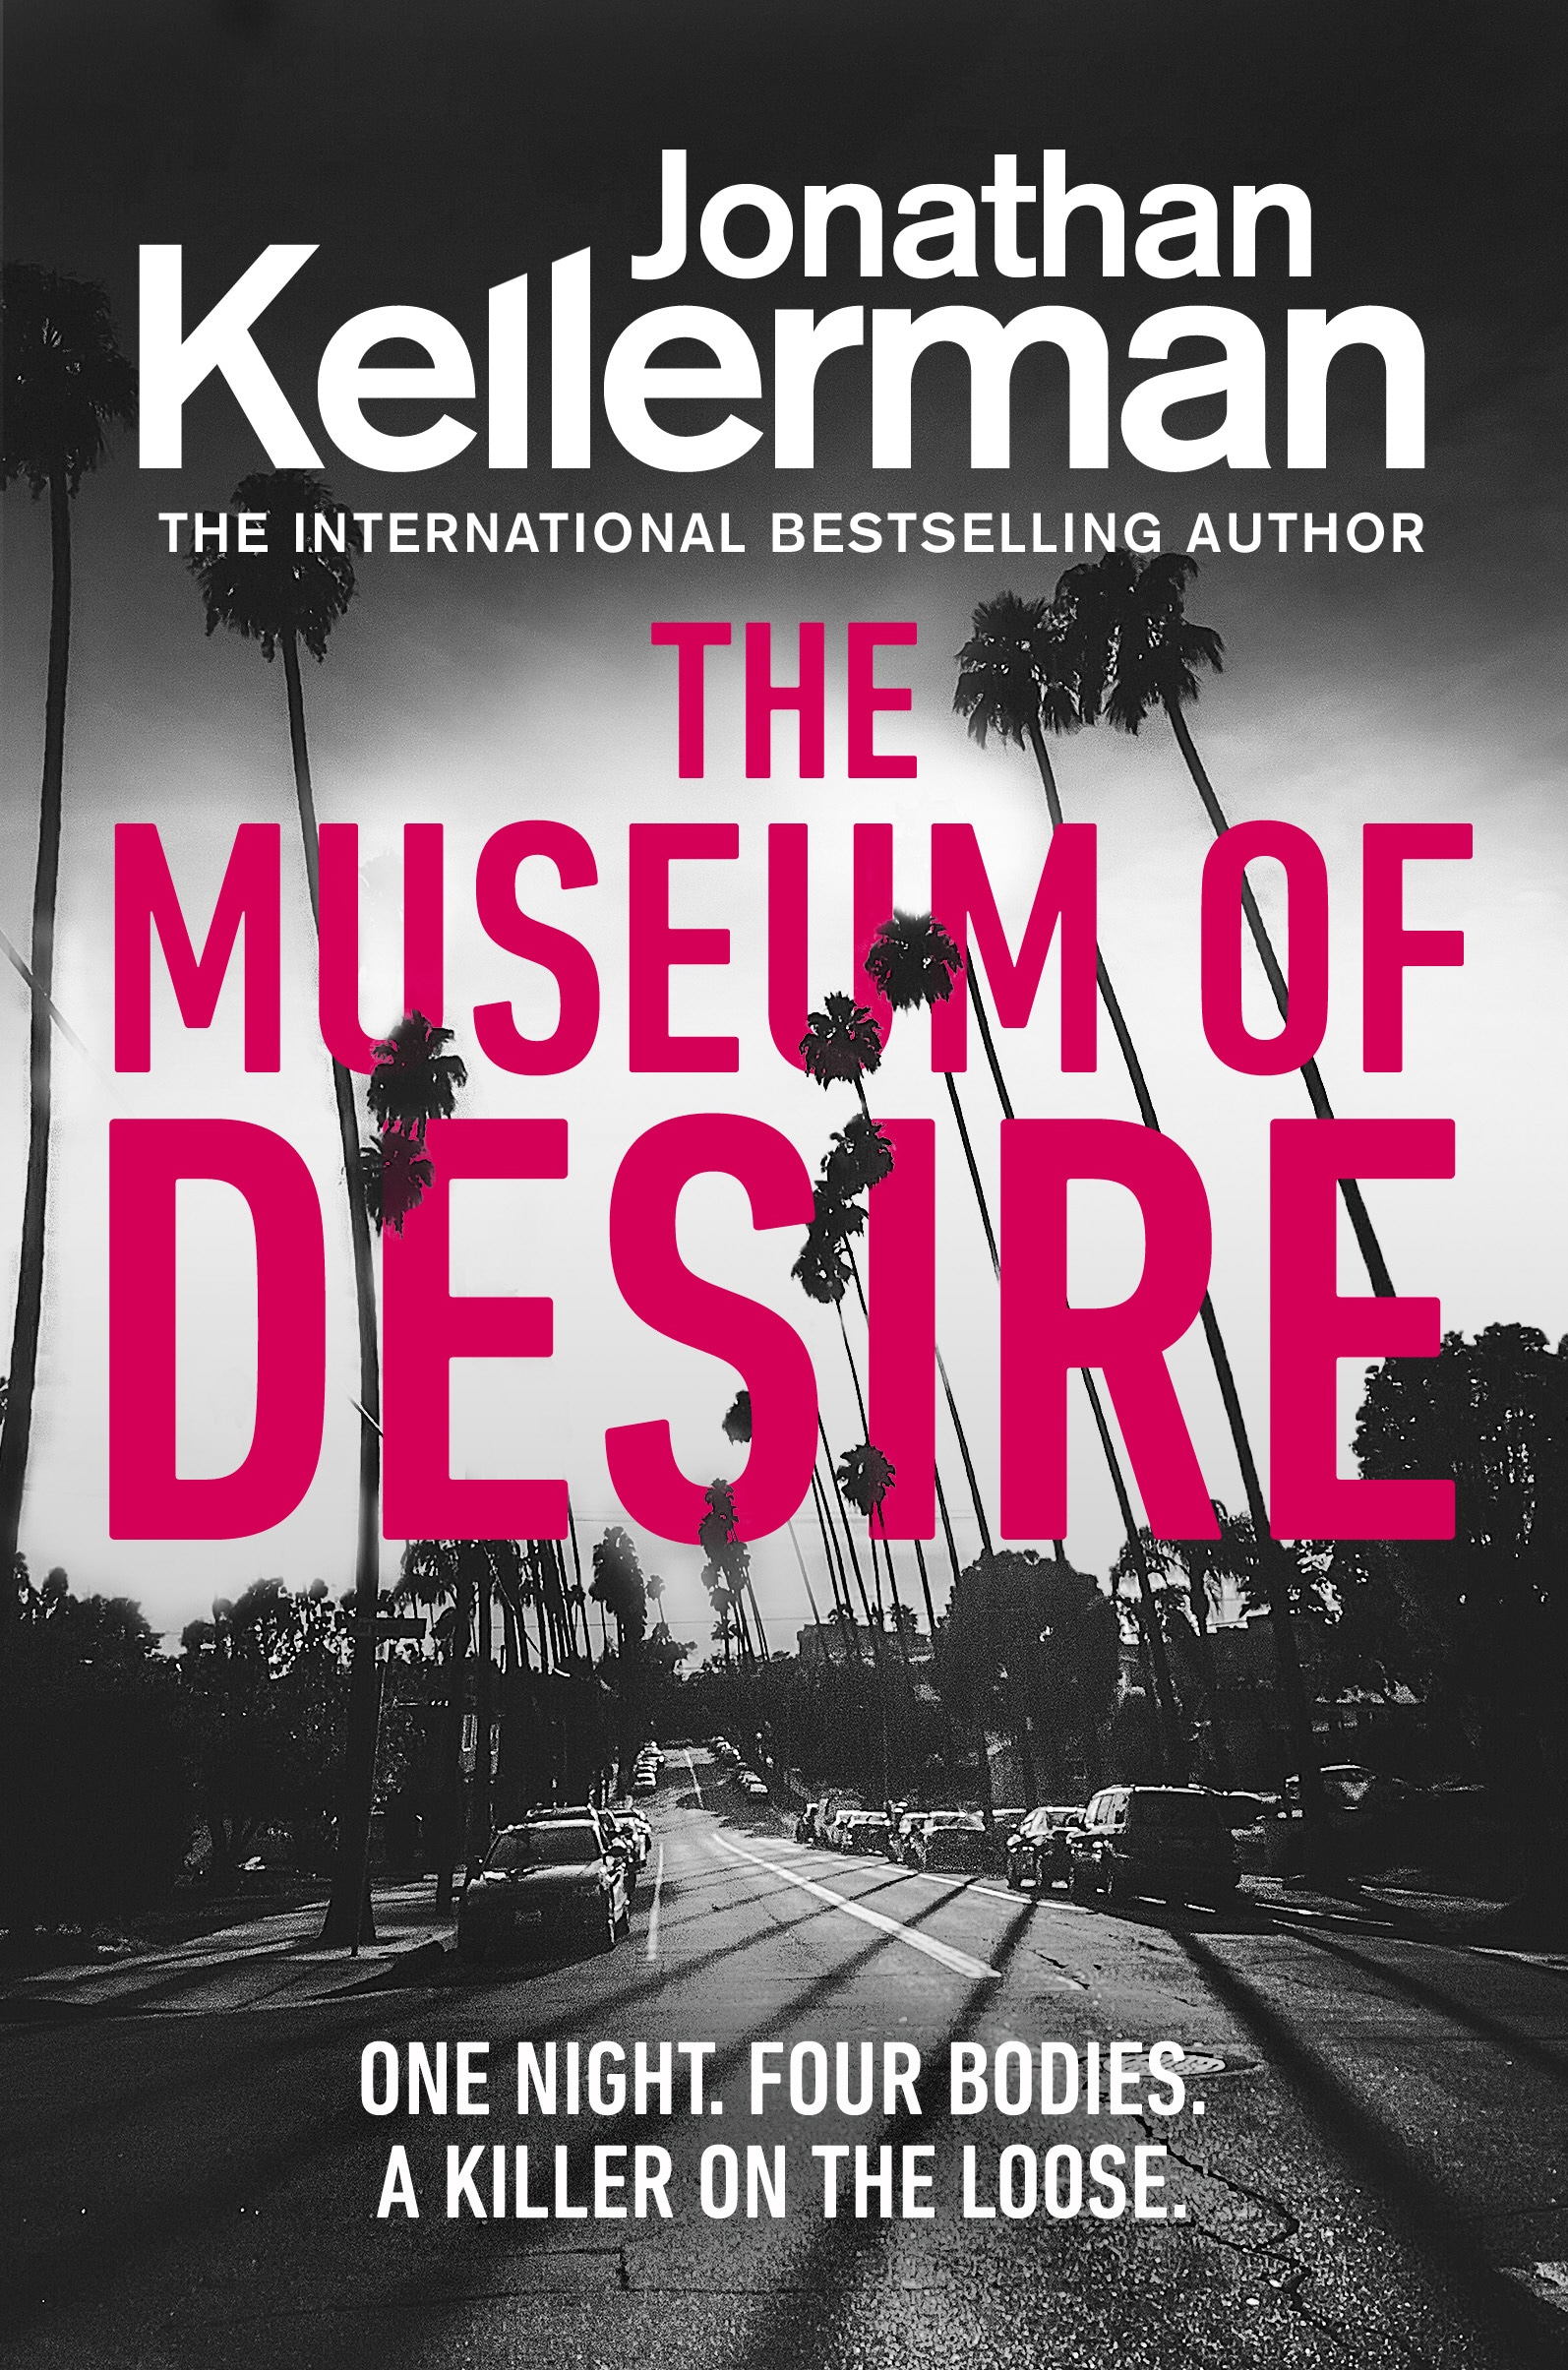 Book “The Museum of Desire” by Jonathan Kellerman — November 12, 2020